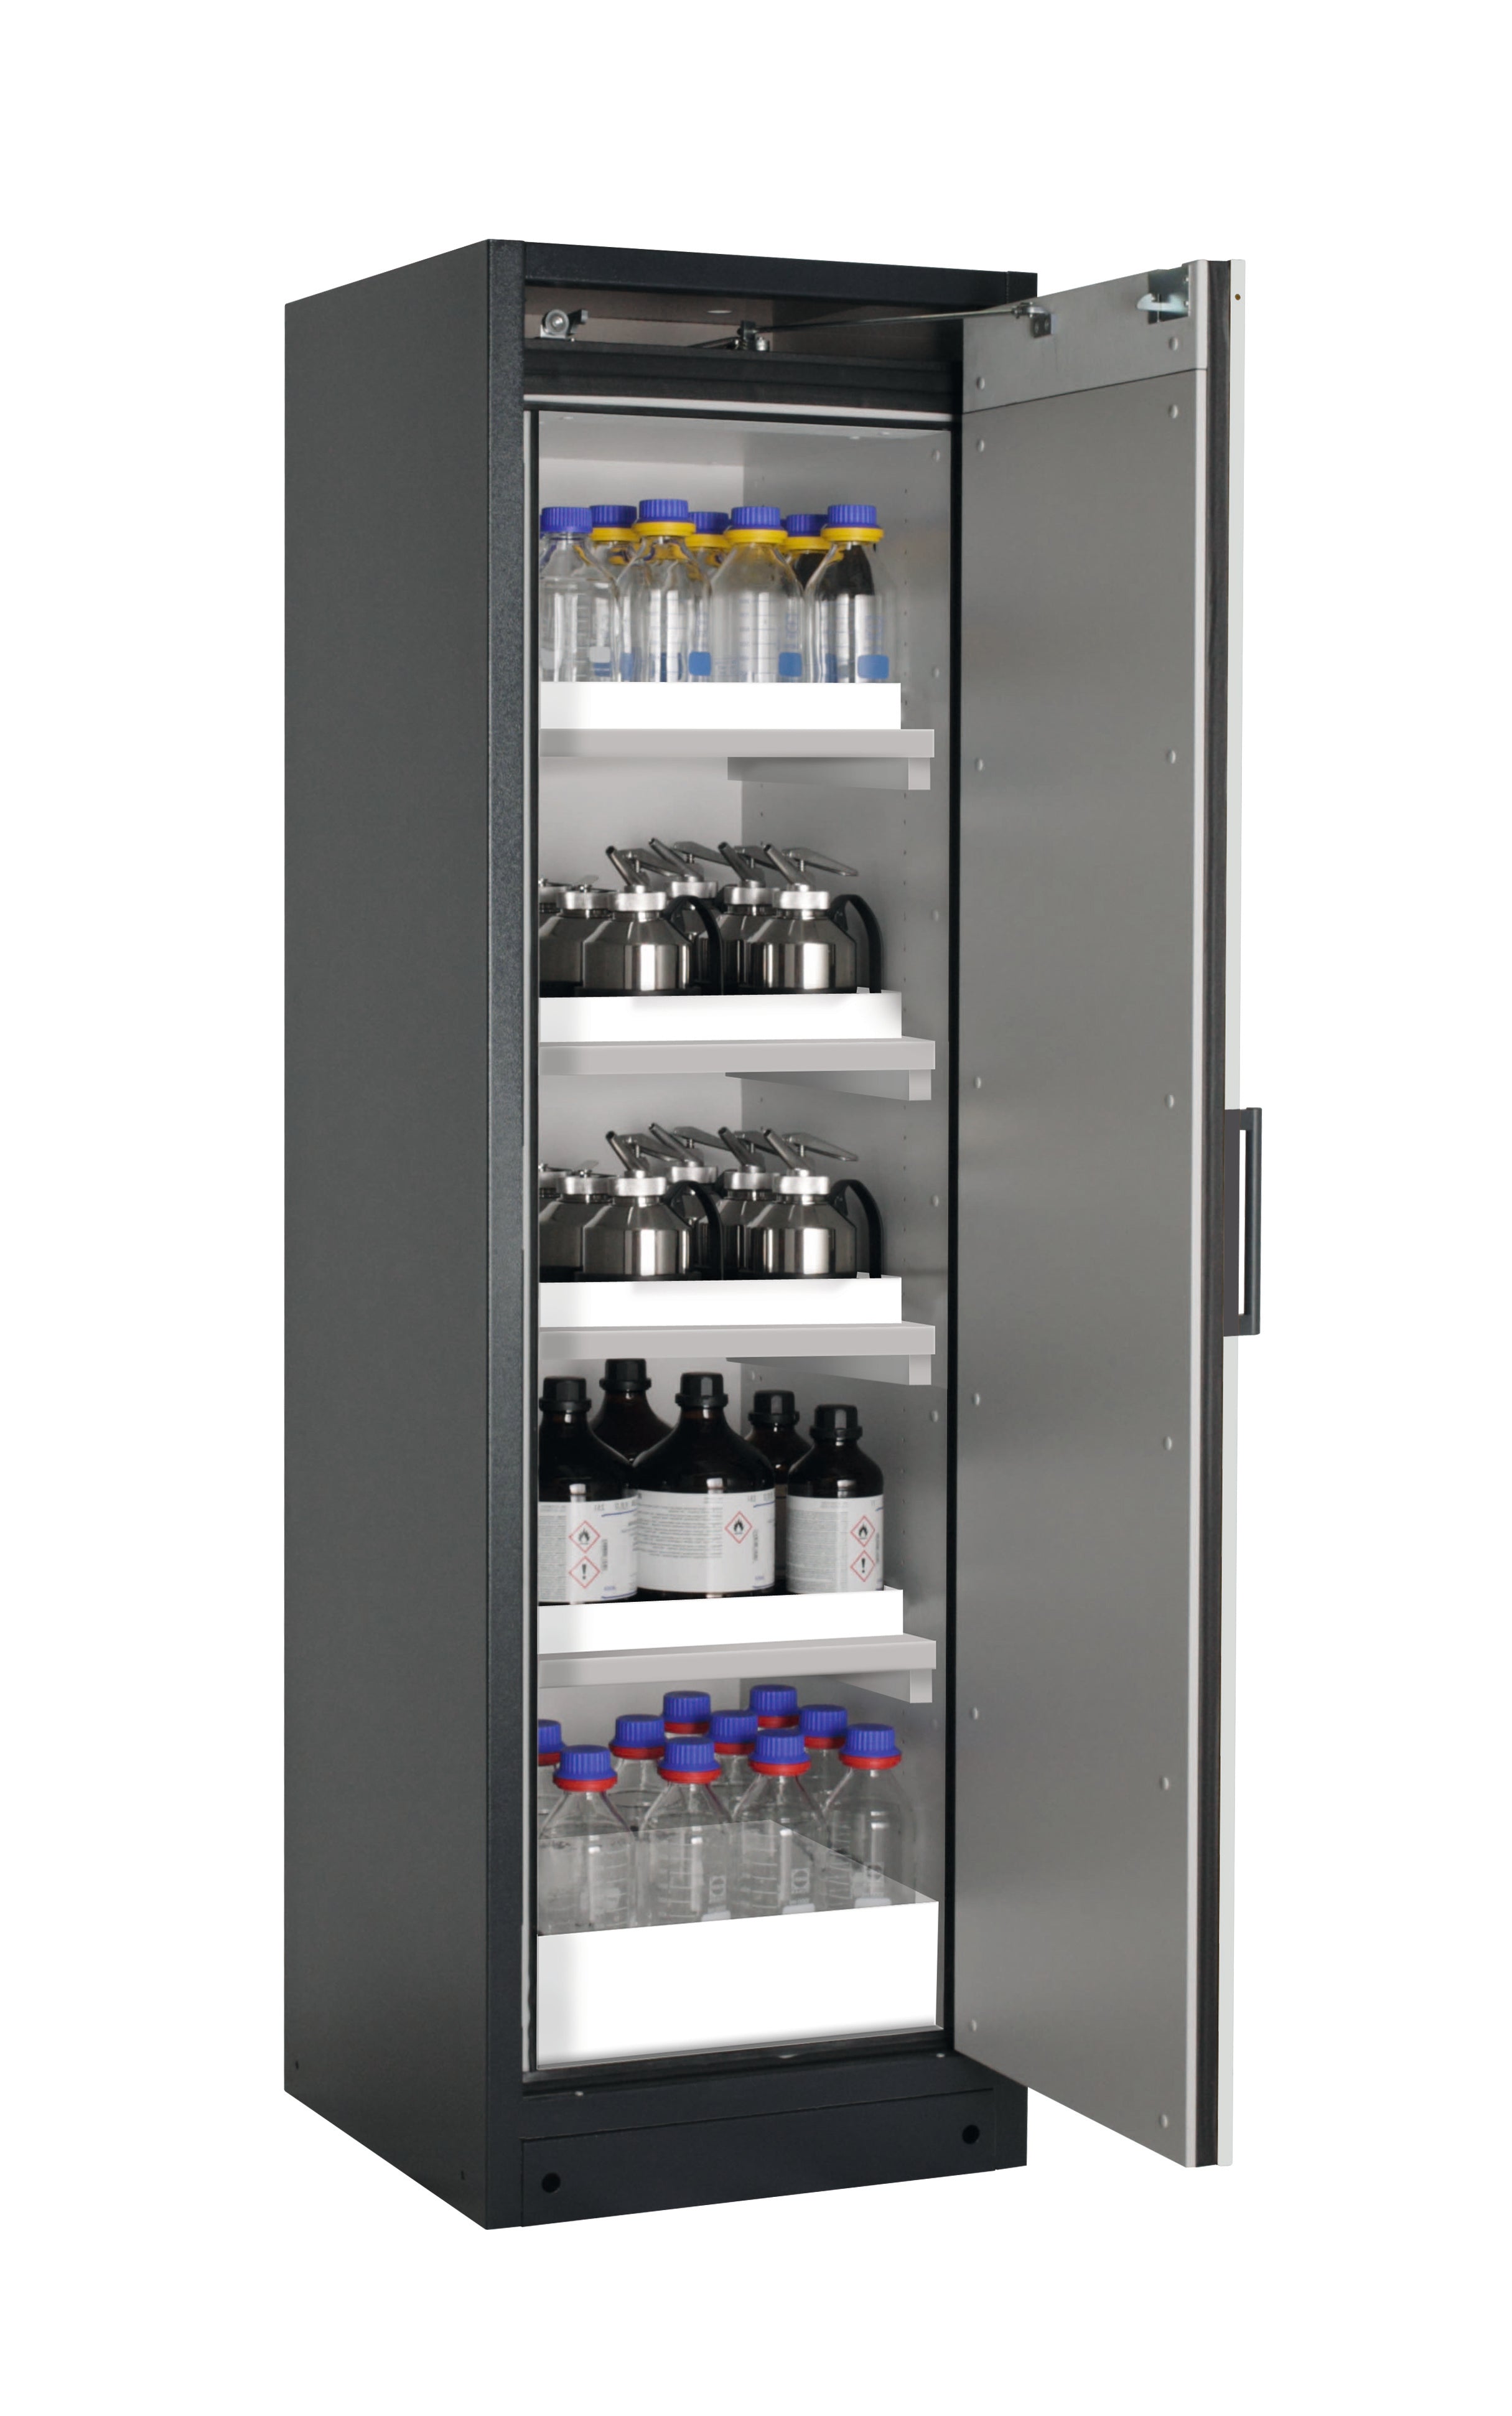 Type 90 safety storage cabinet Q-PEGASUS-90 model Q90.195.060.WDACR in light grey RAL 7035 with 4x tray shelf (standard) (polypropylene),